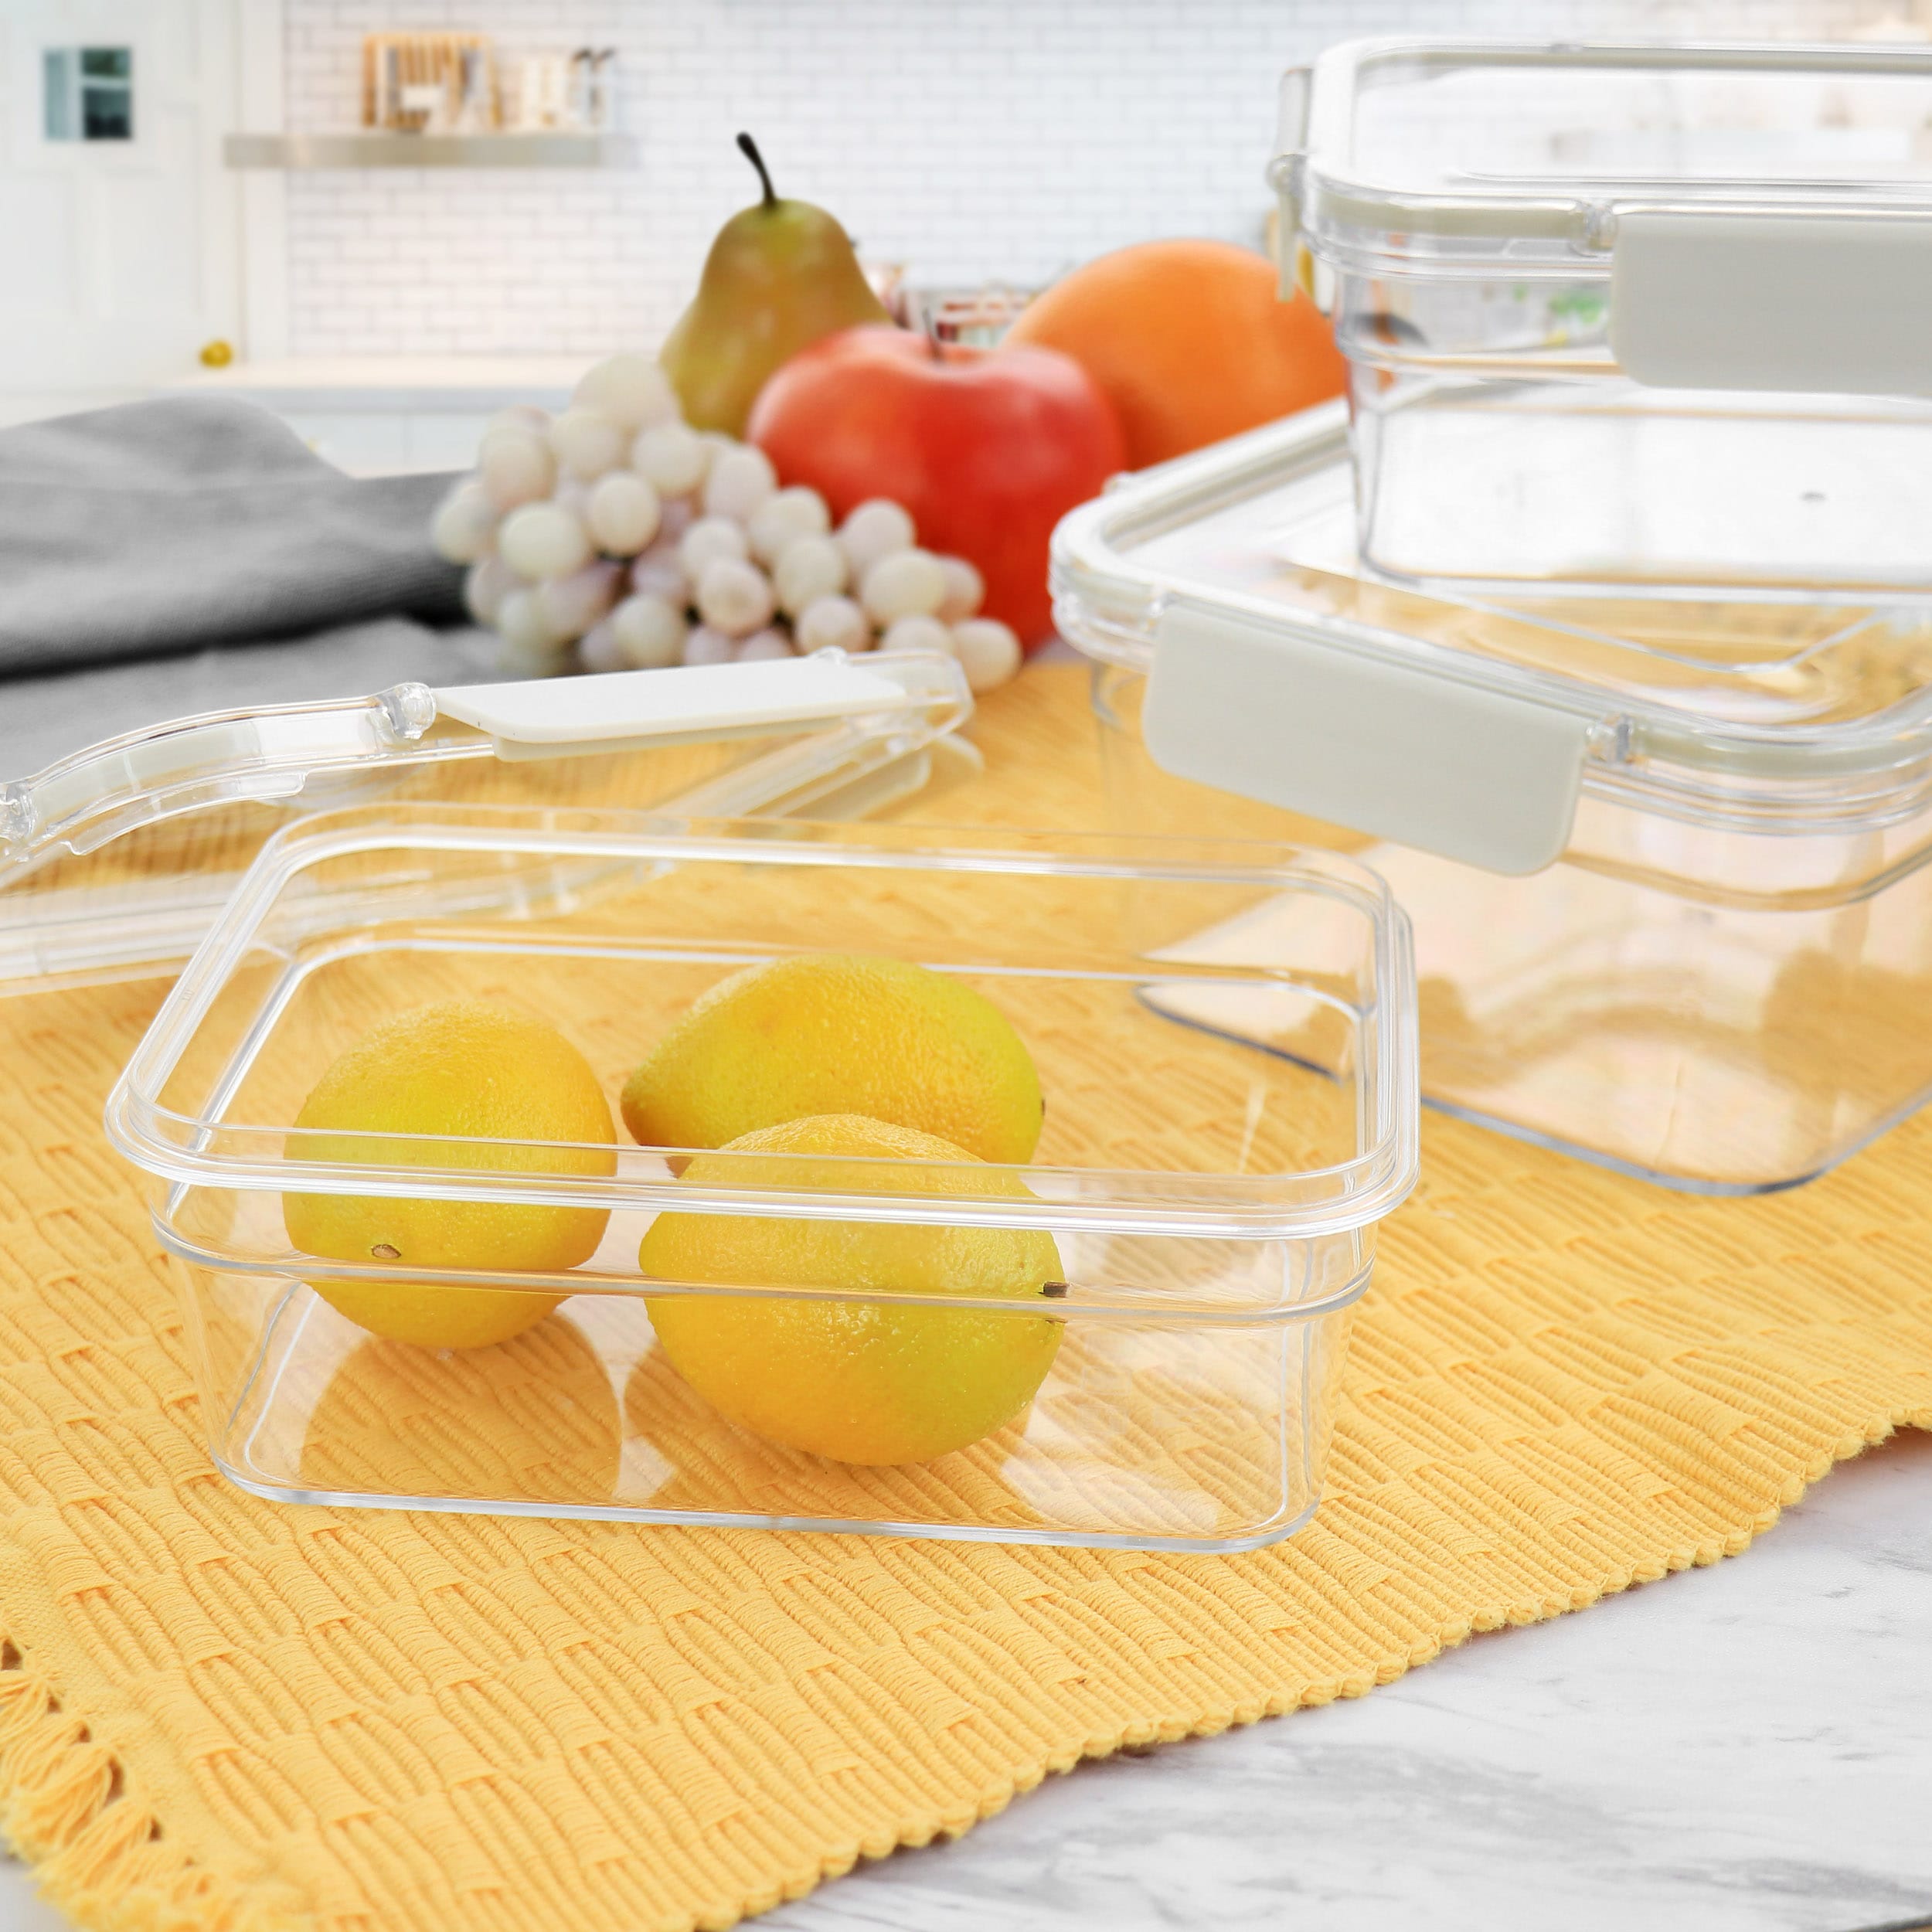 Martha Stewart 6-Pack Multisize Glass BPA-Free Reusable Food